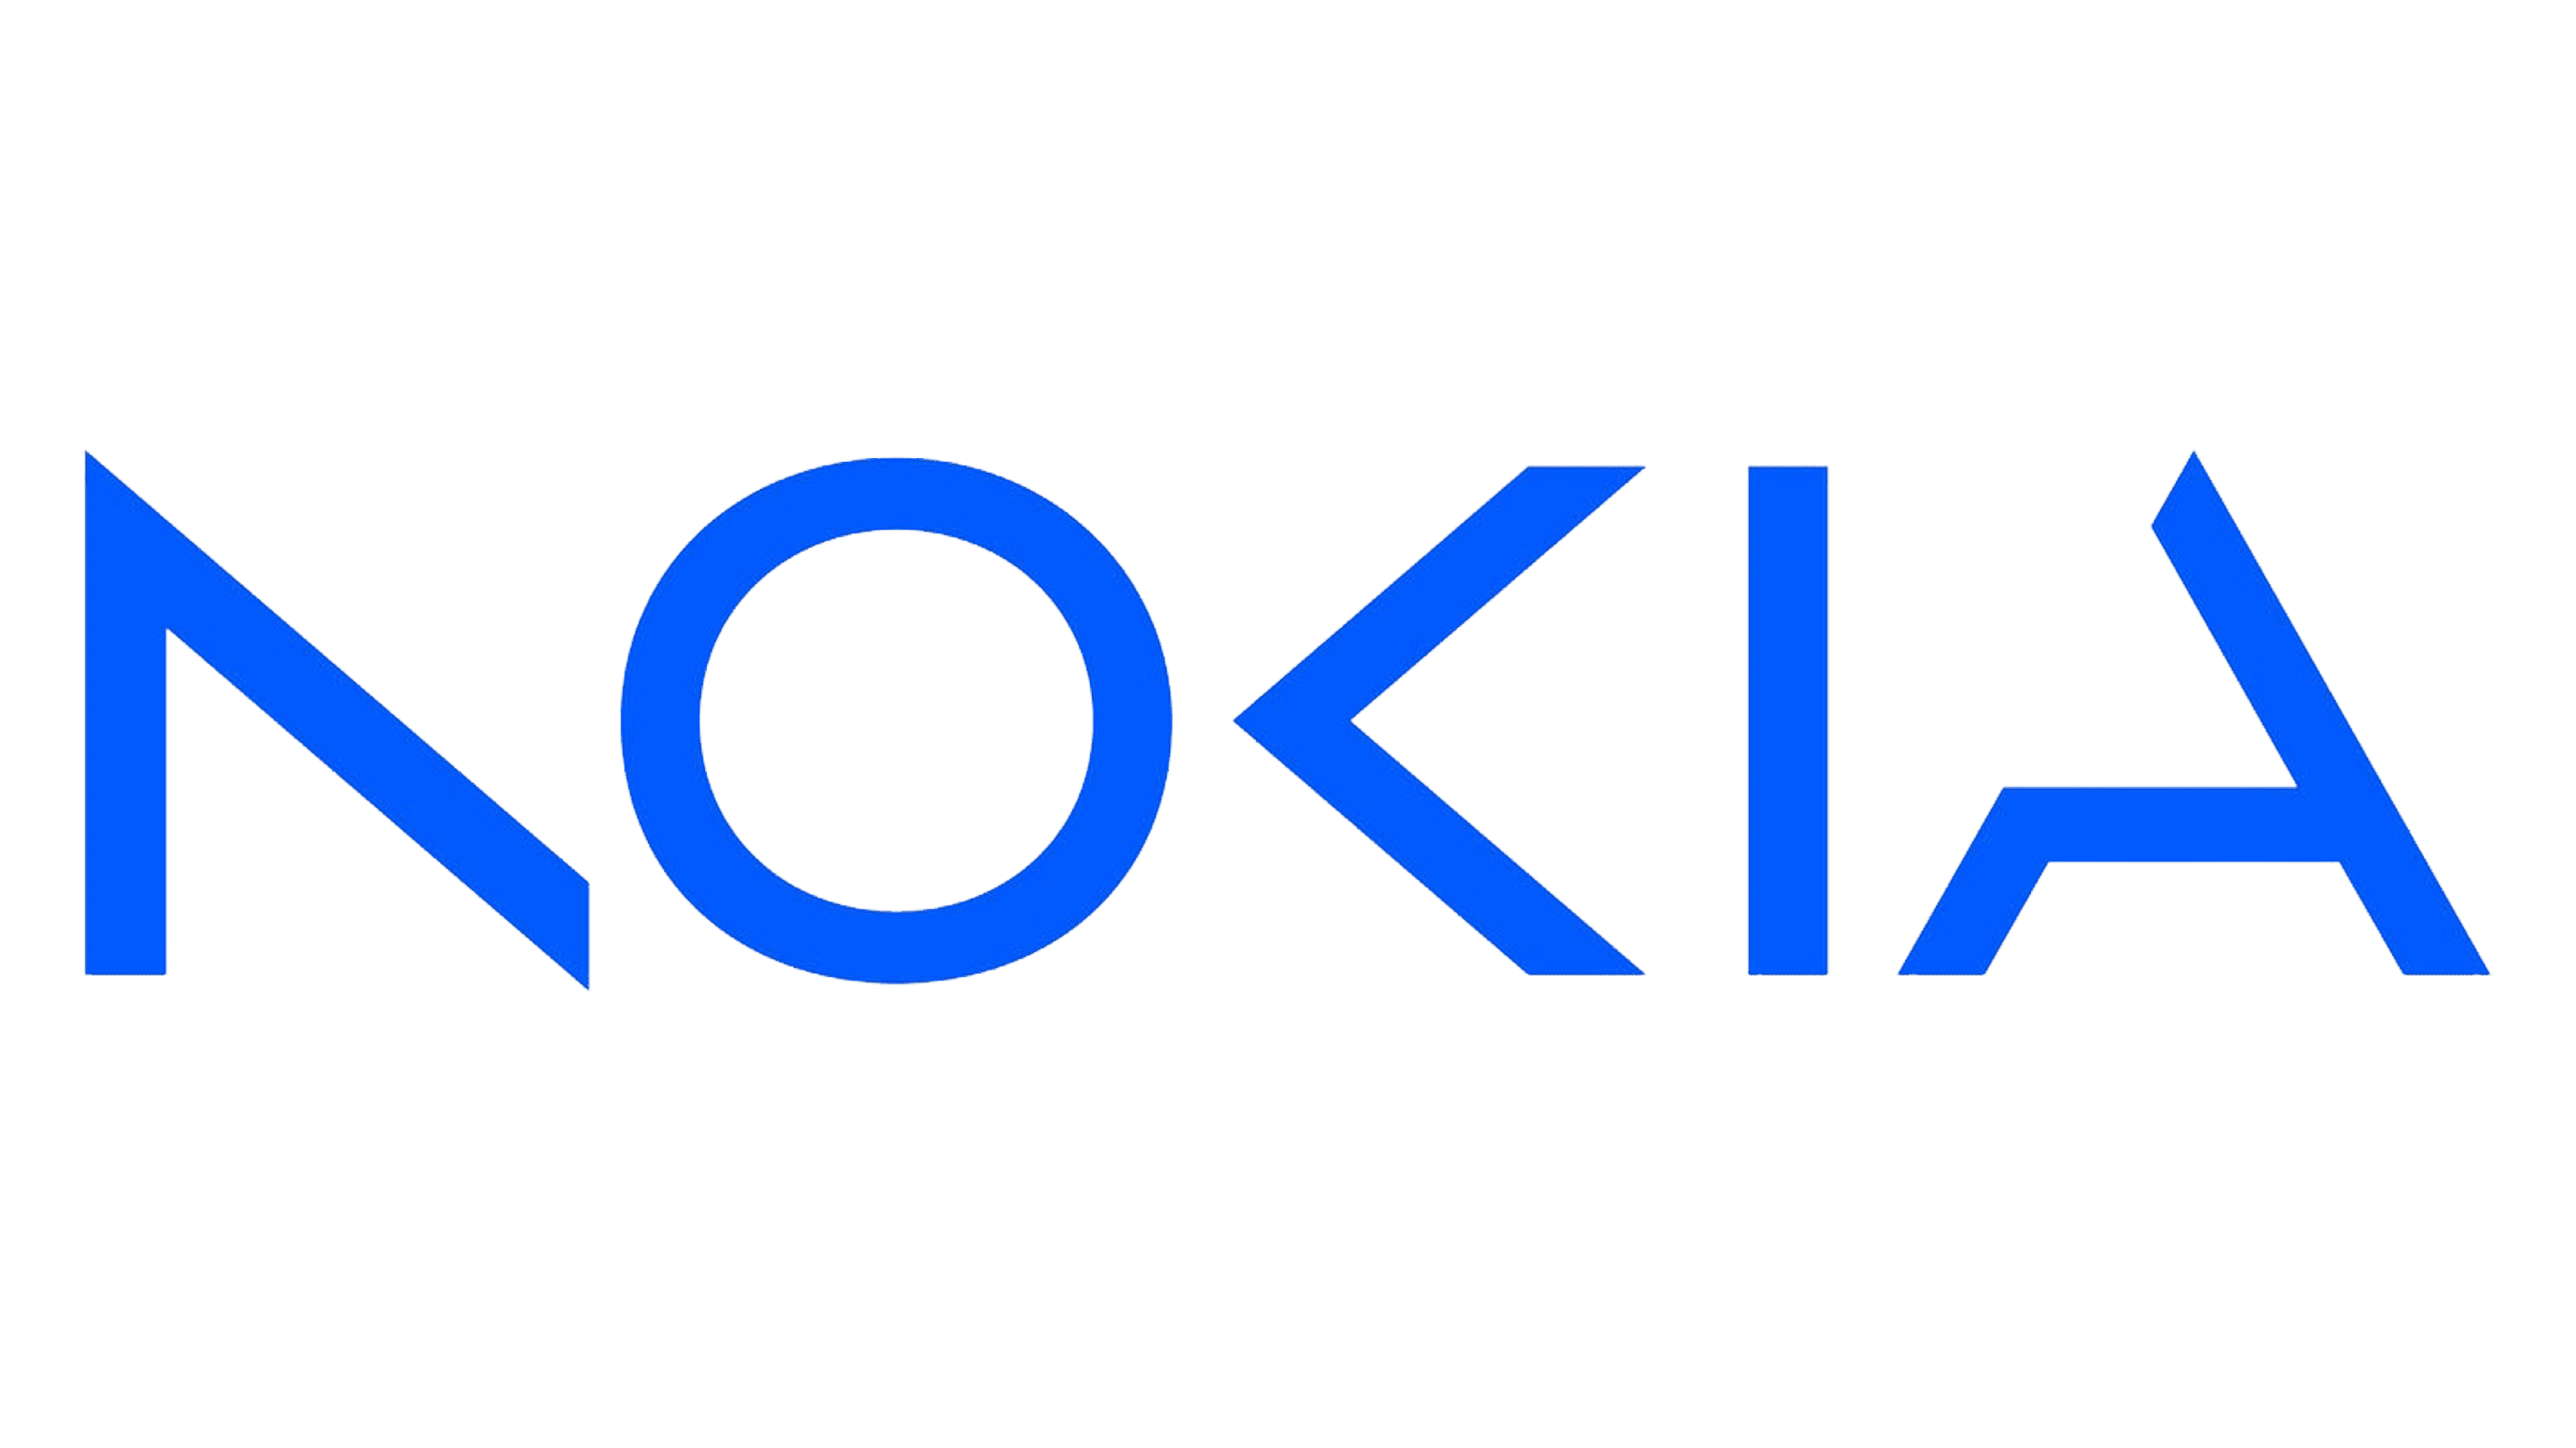 Nokia Logo, Nokia Symbol Meaning, History and Evolution